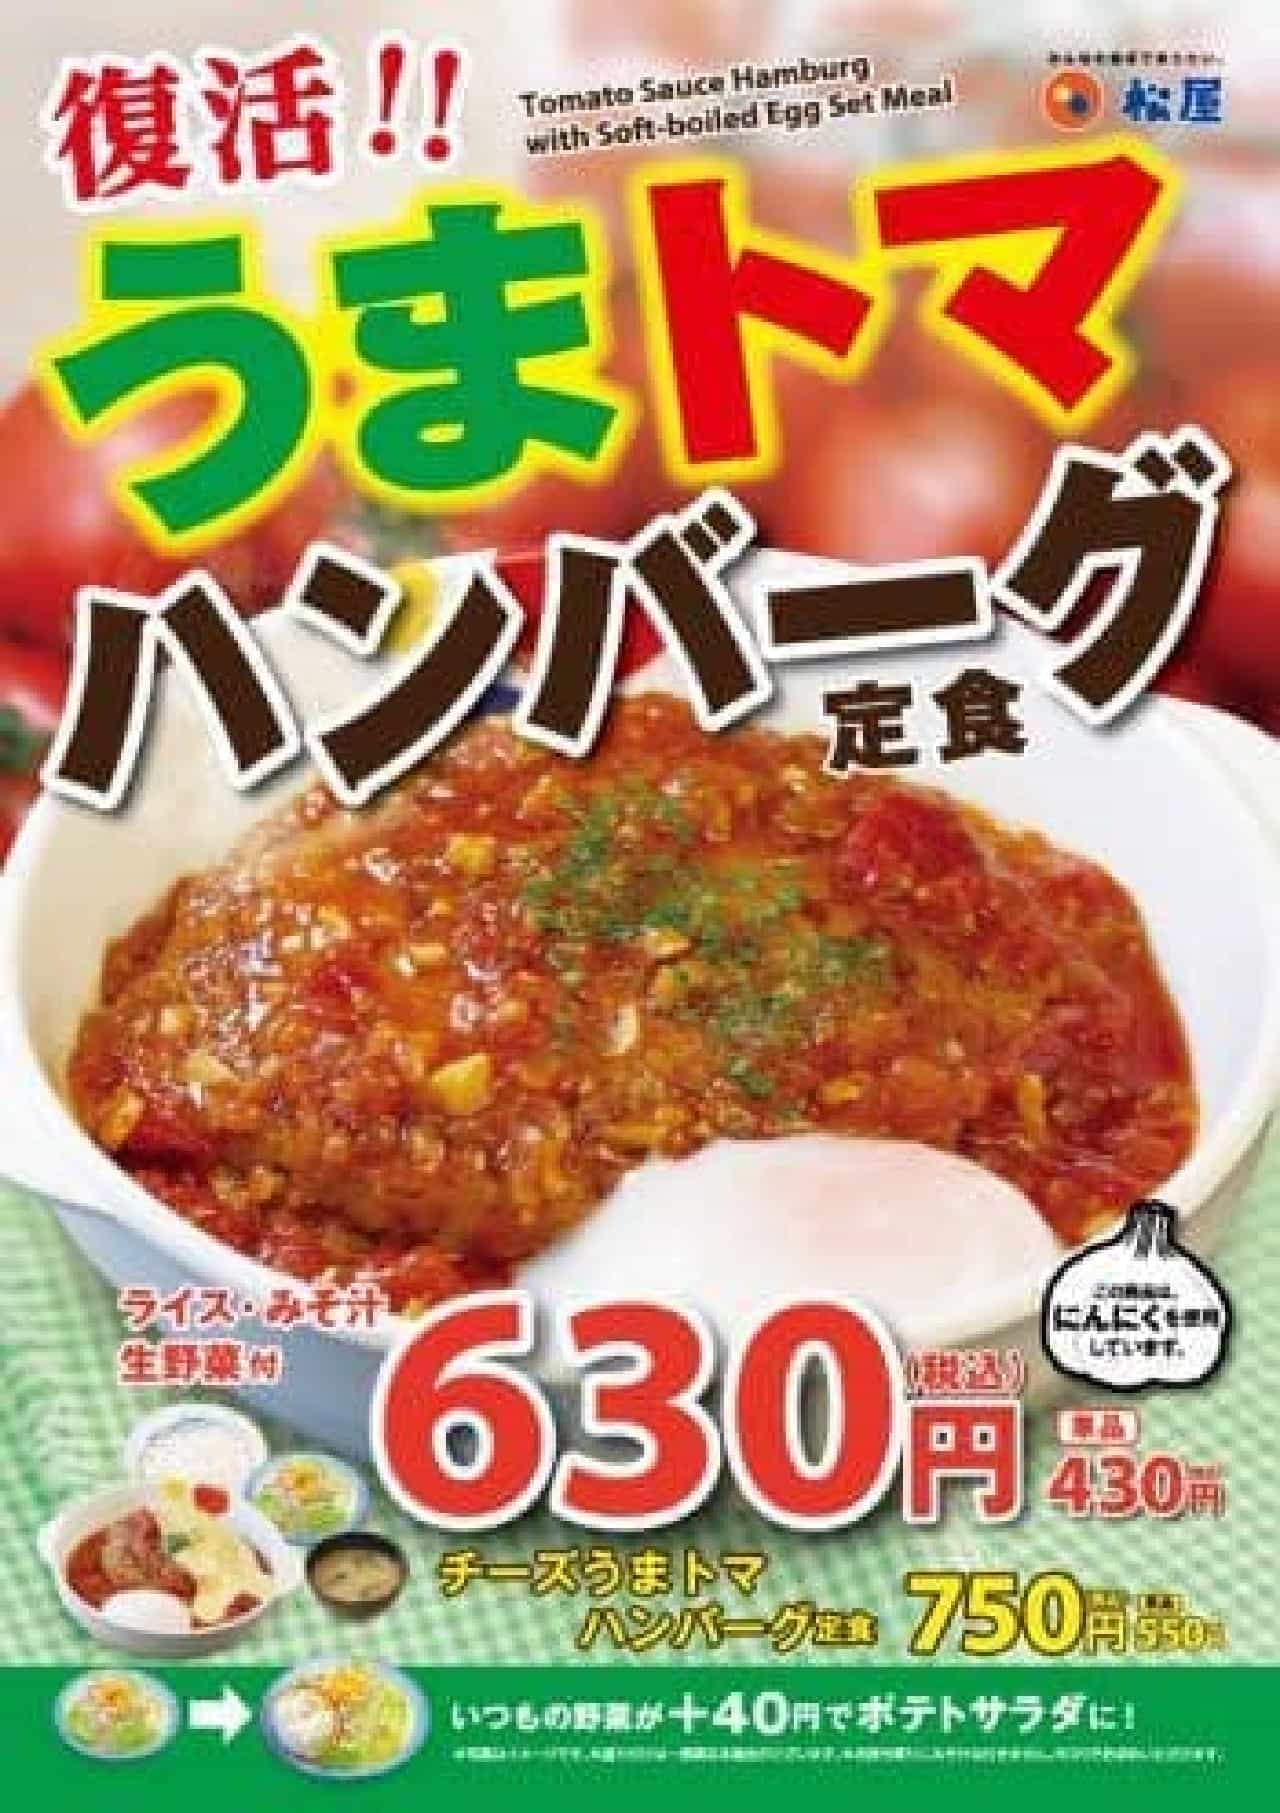 Matsuya "Horse tomato hamburger set meal"